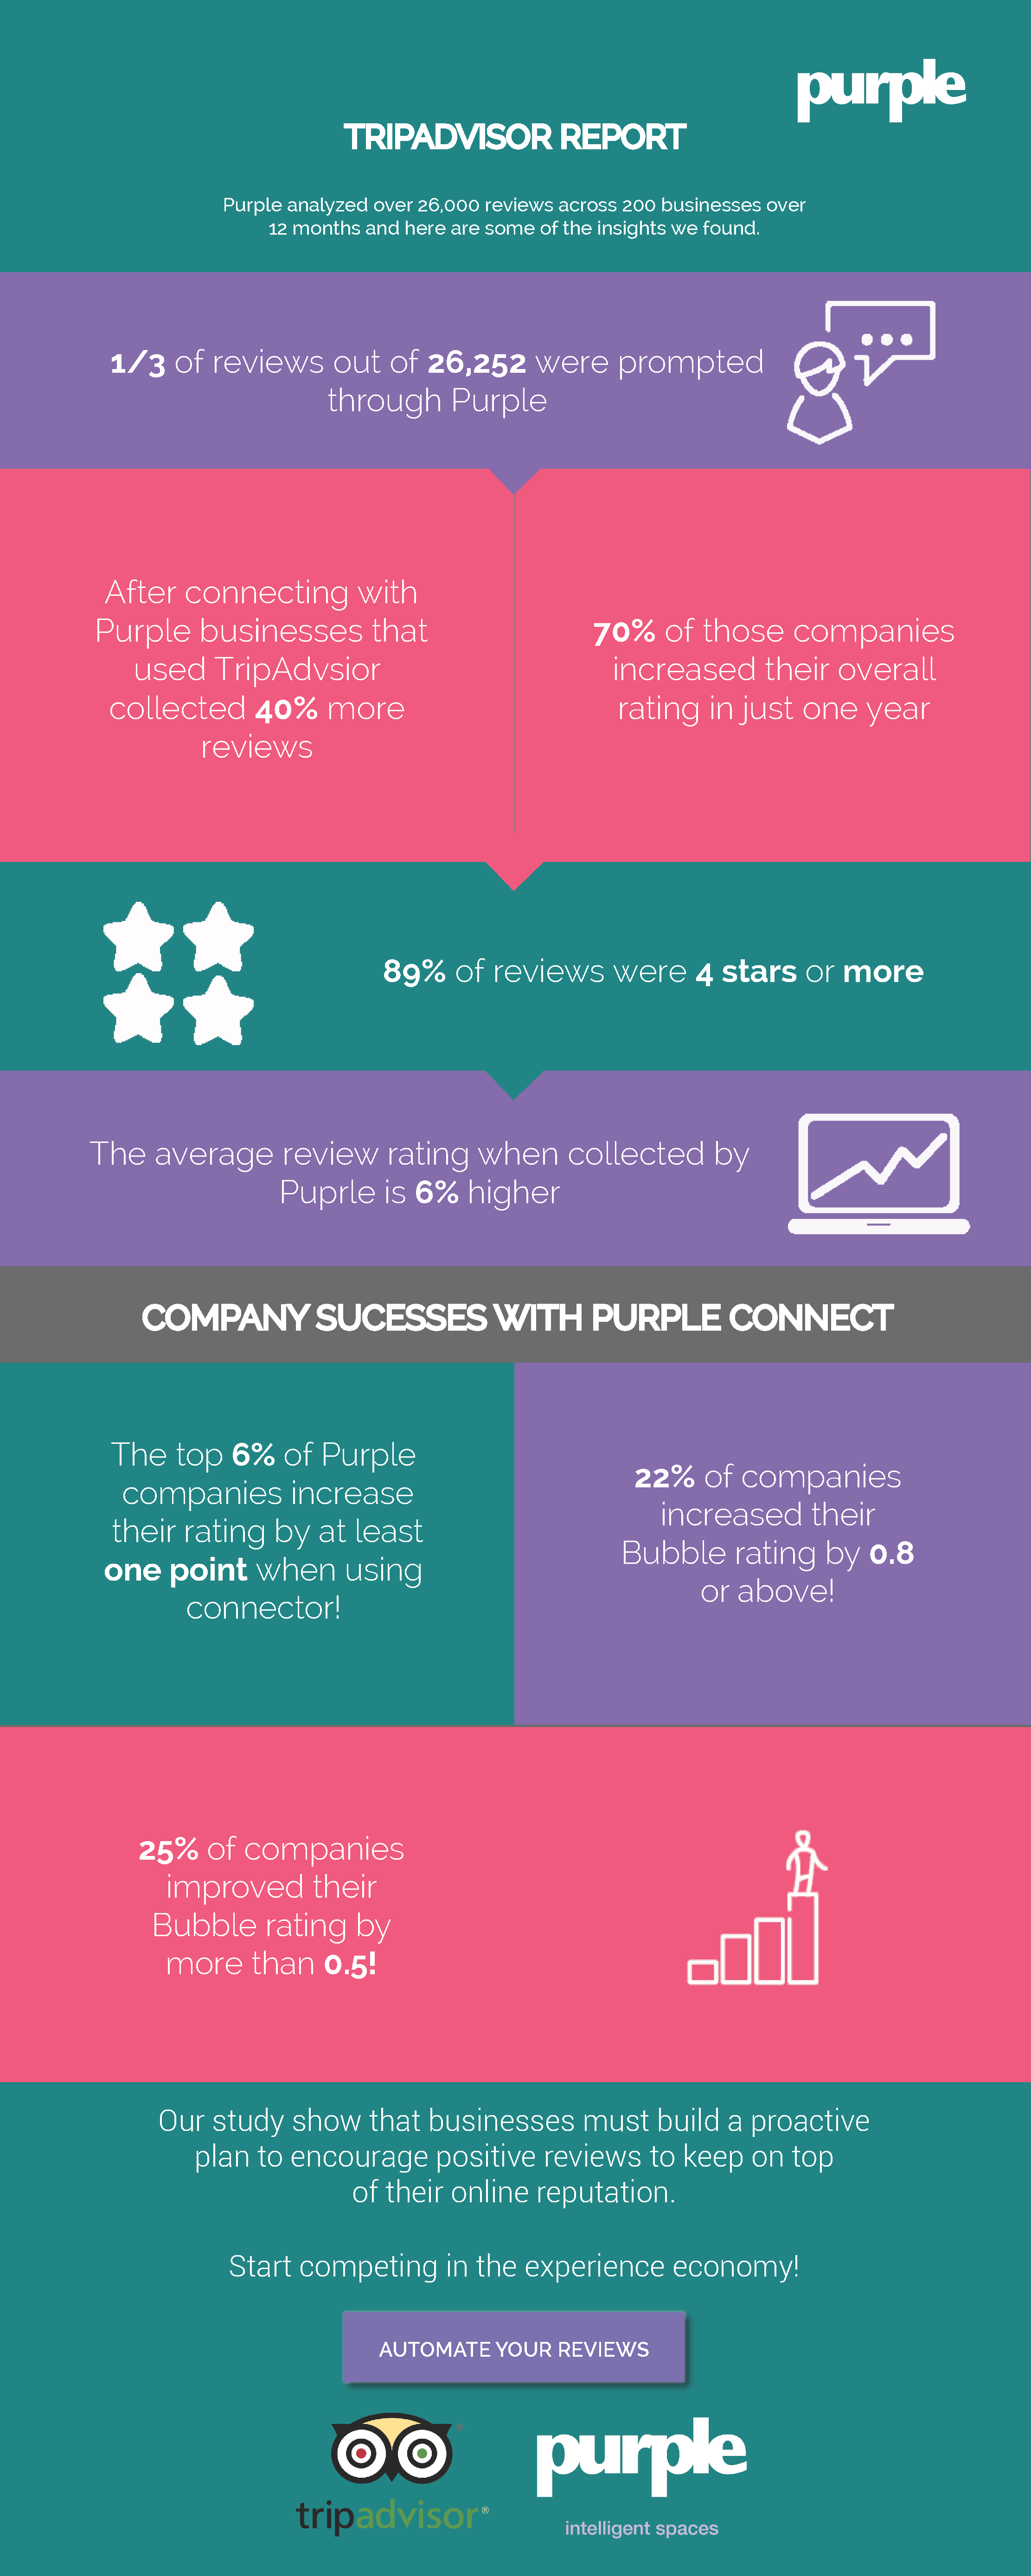 Purples-TripAdvisor-Connector Infographic